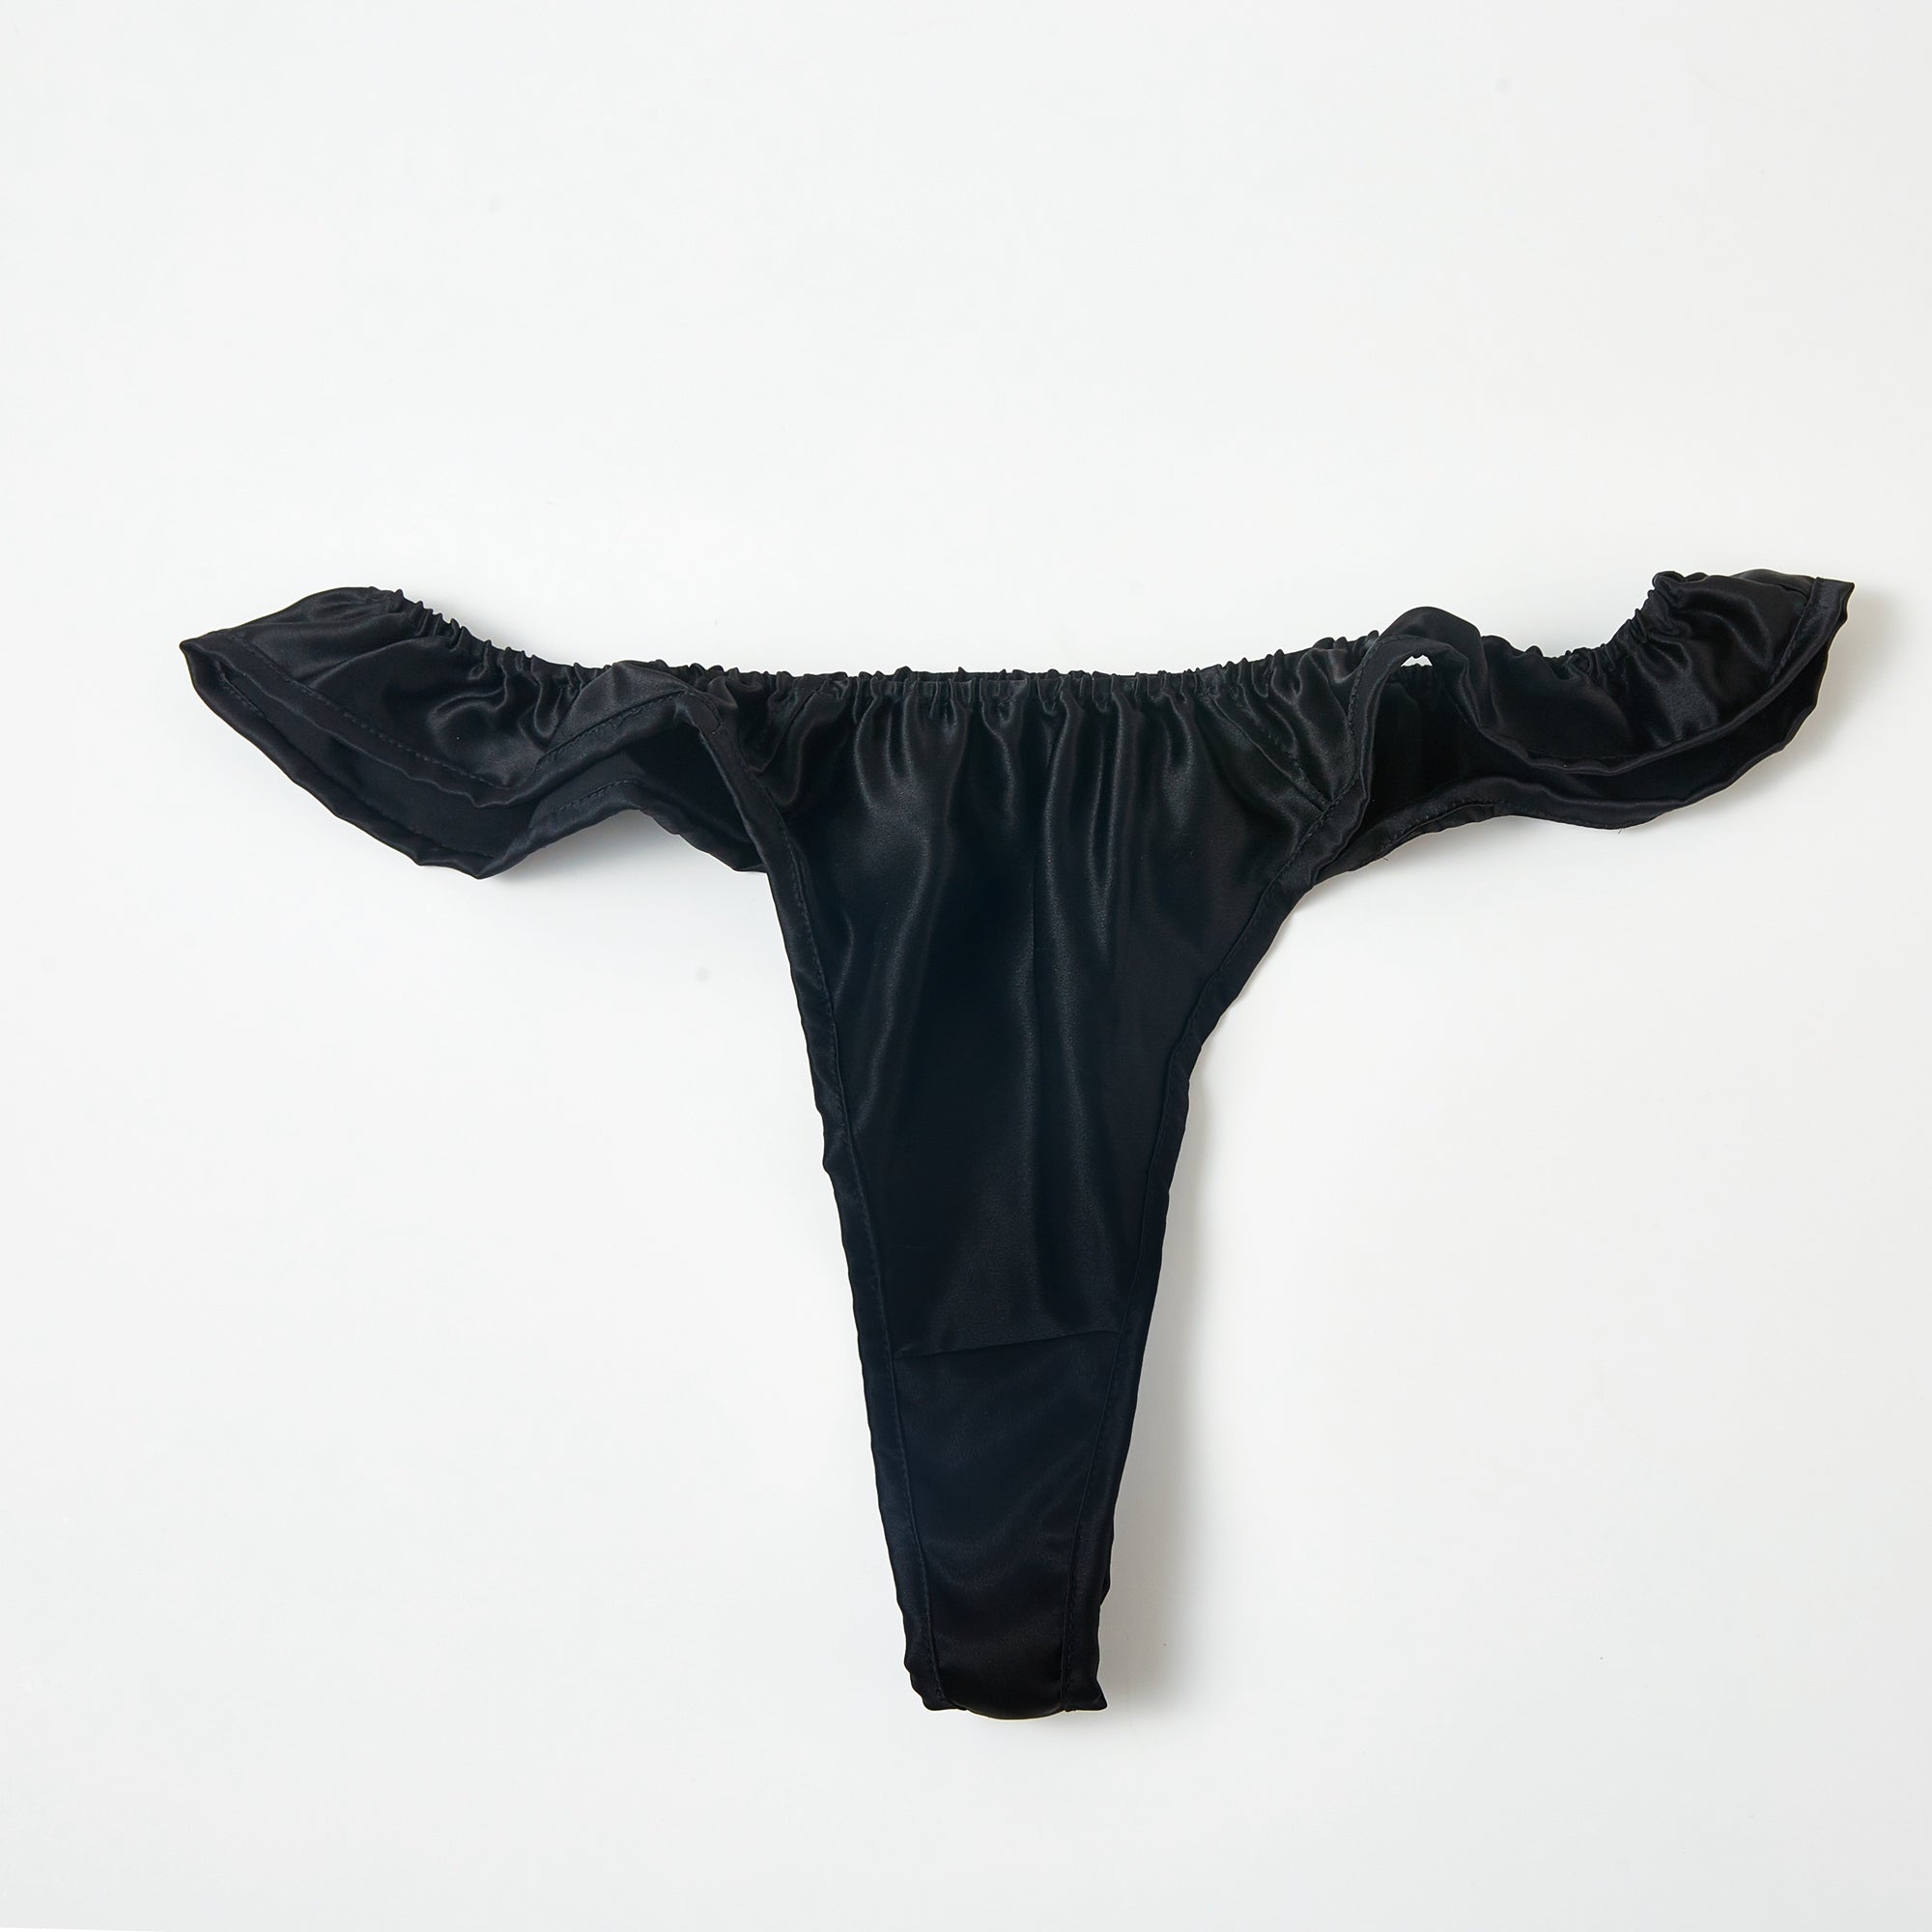 100% Cotton black Strings Underwear size L New Thongs